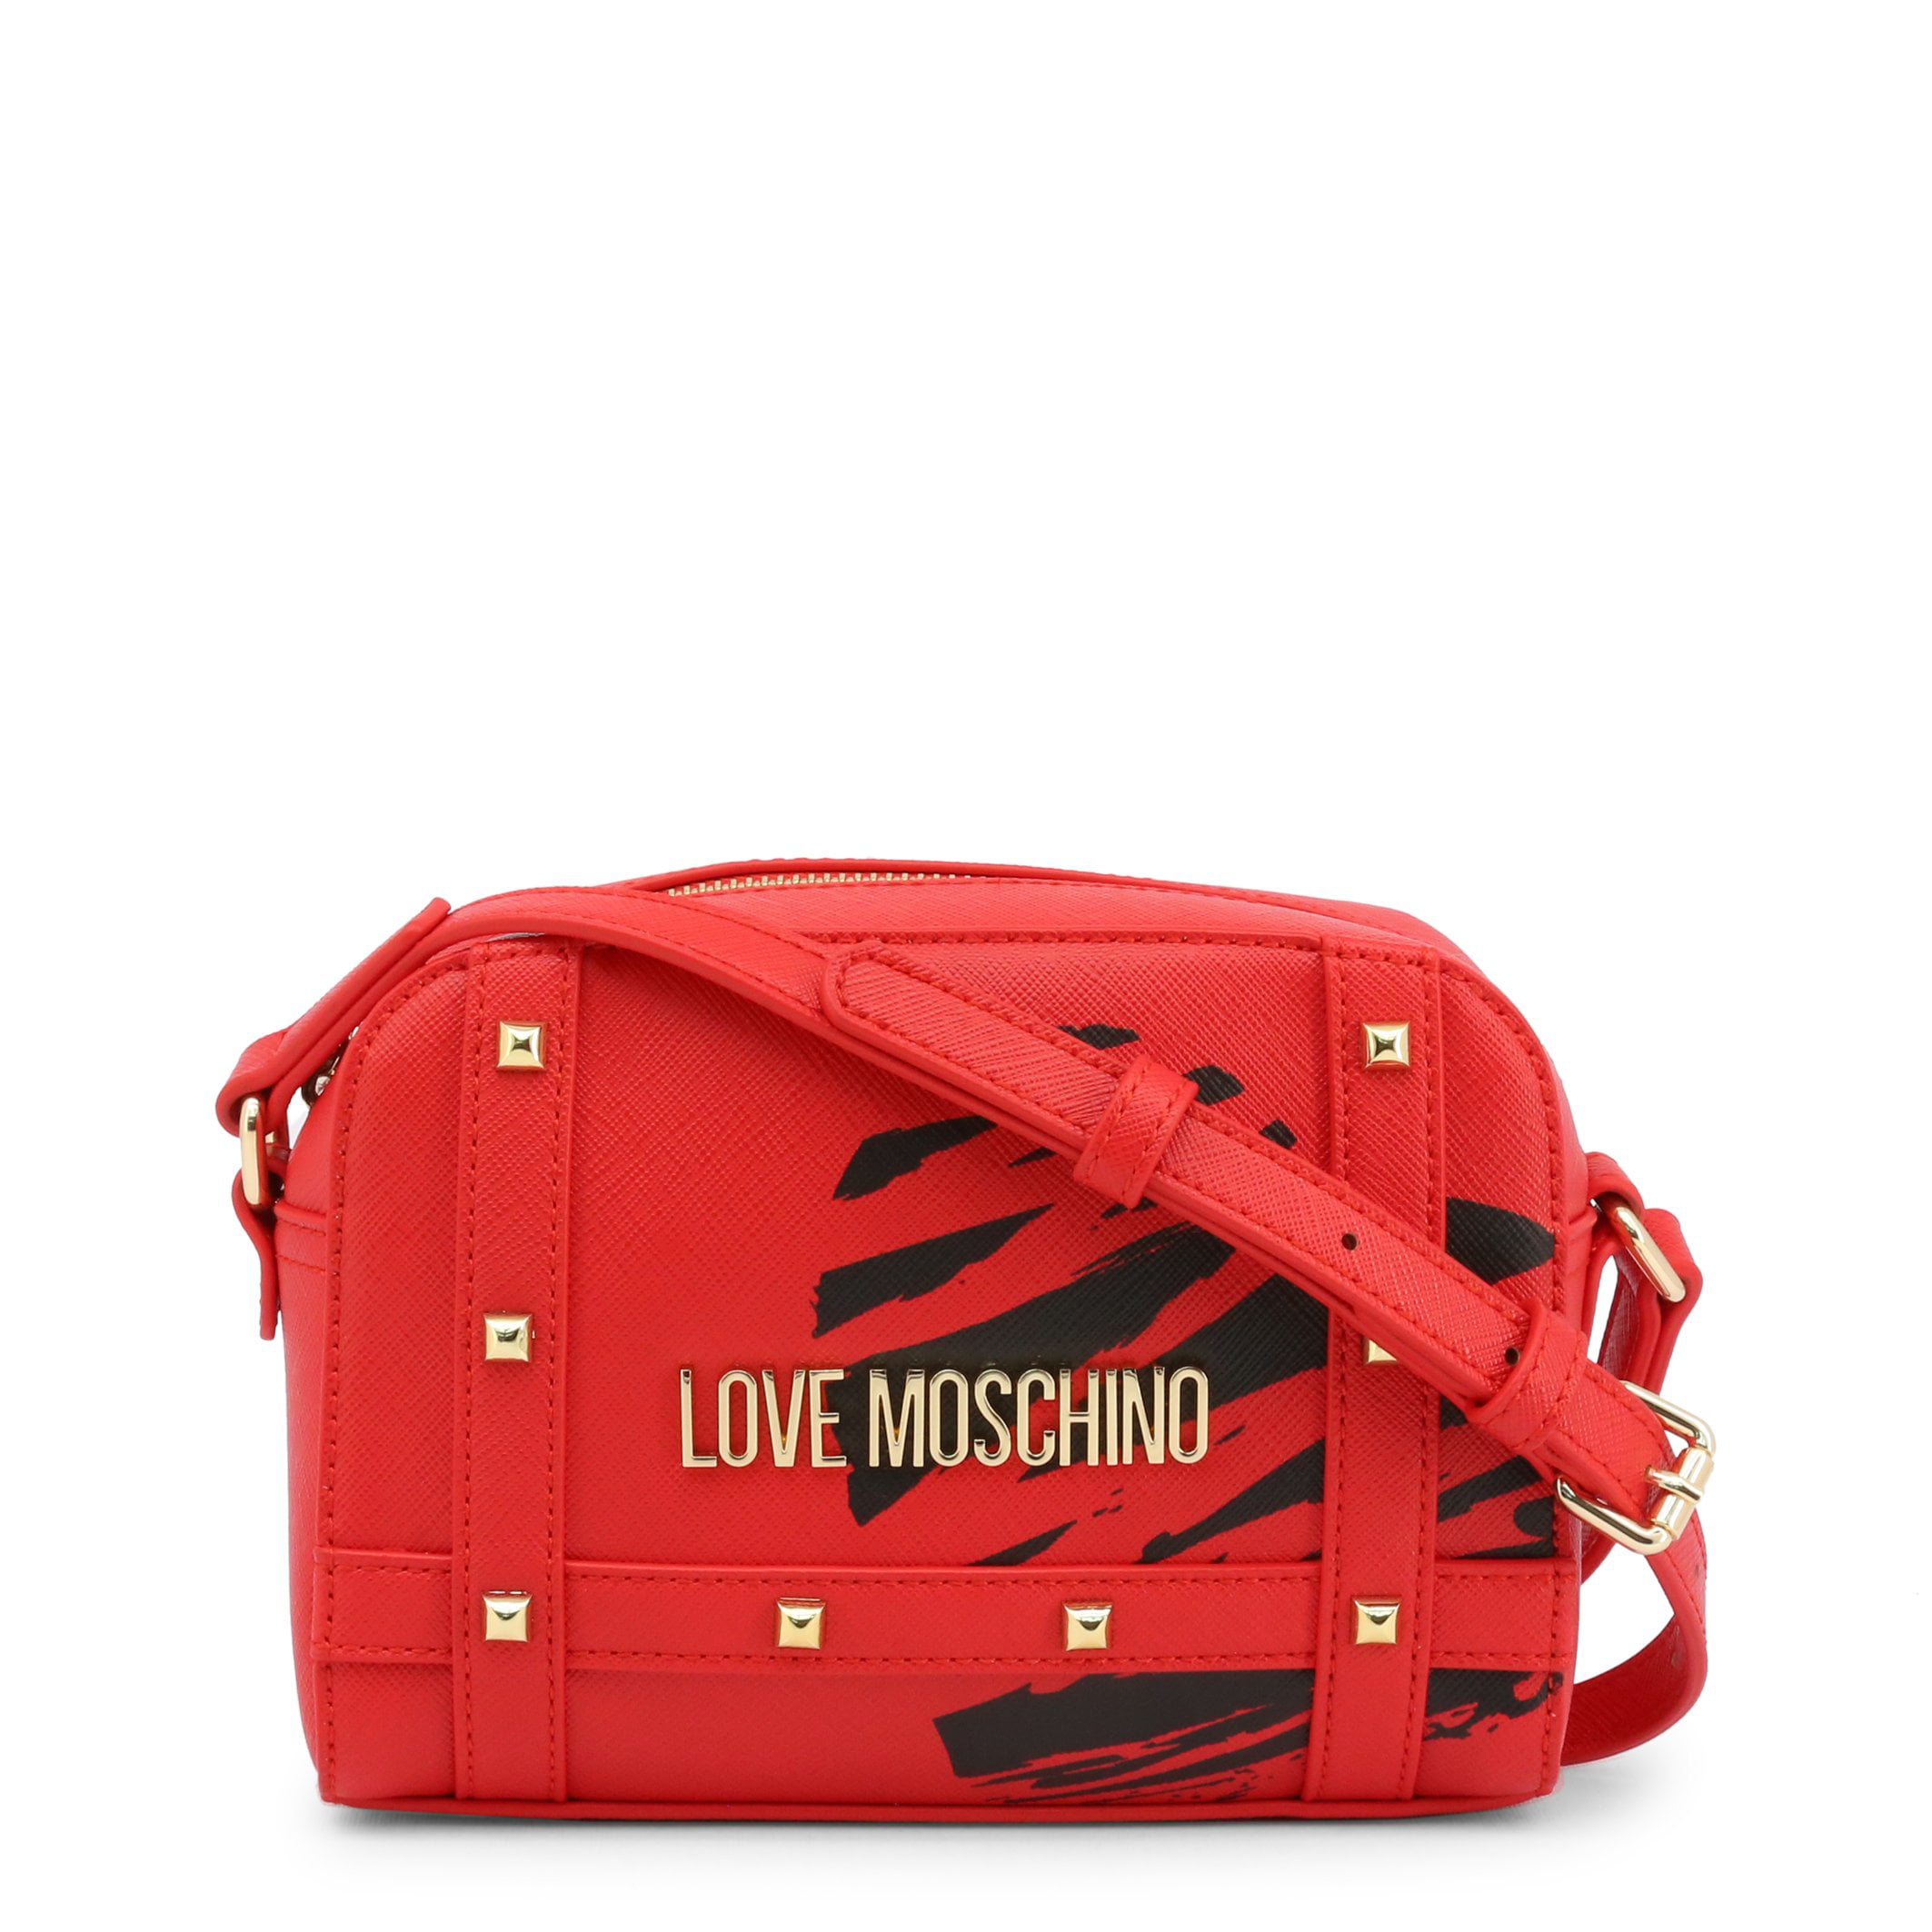 LOVE MOSCHINO Women's White Cross-body Bag Red Heart Chain Strap New Authentic